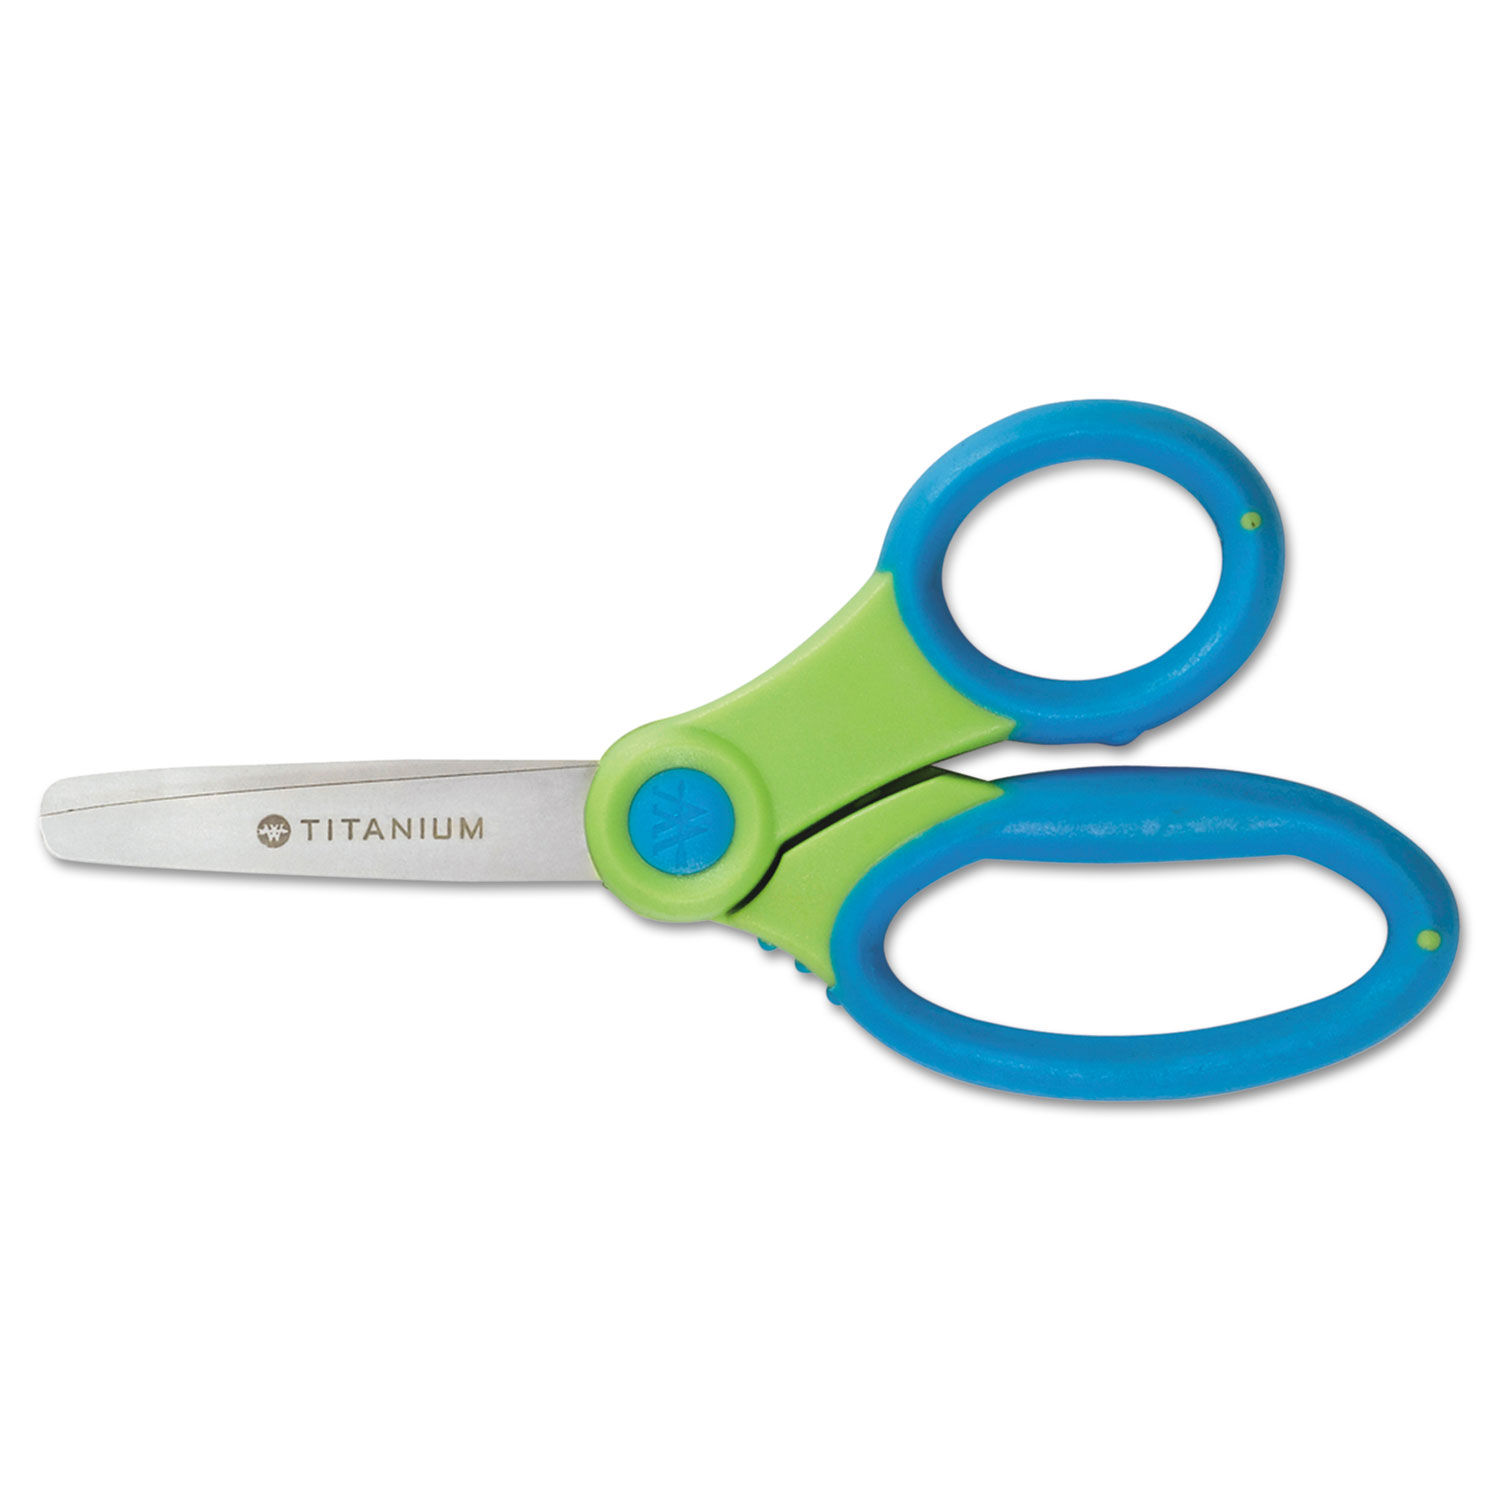 Westcott Hard Handle Kids Scissors